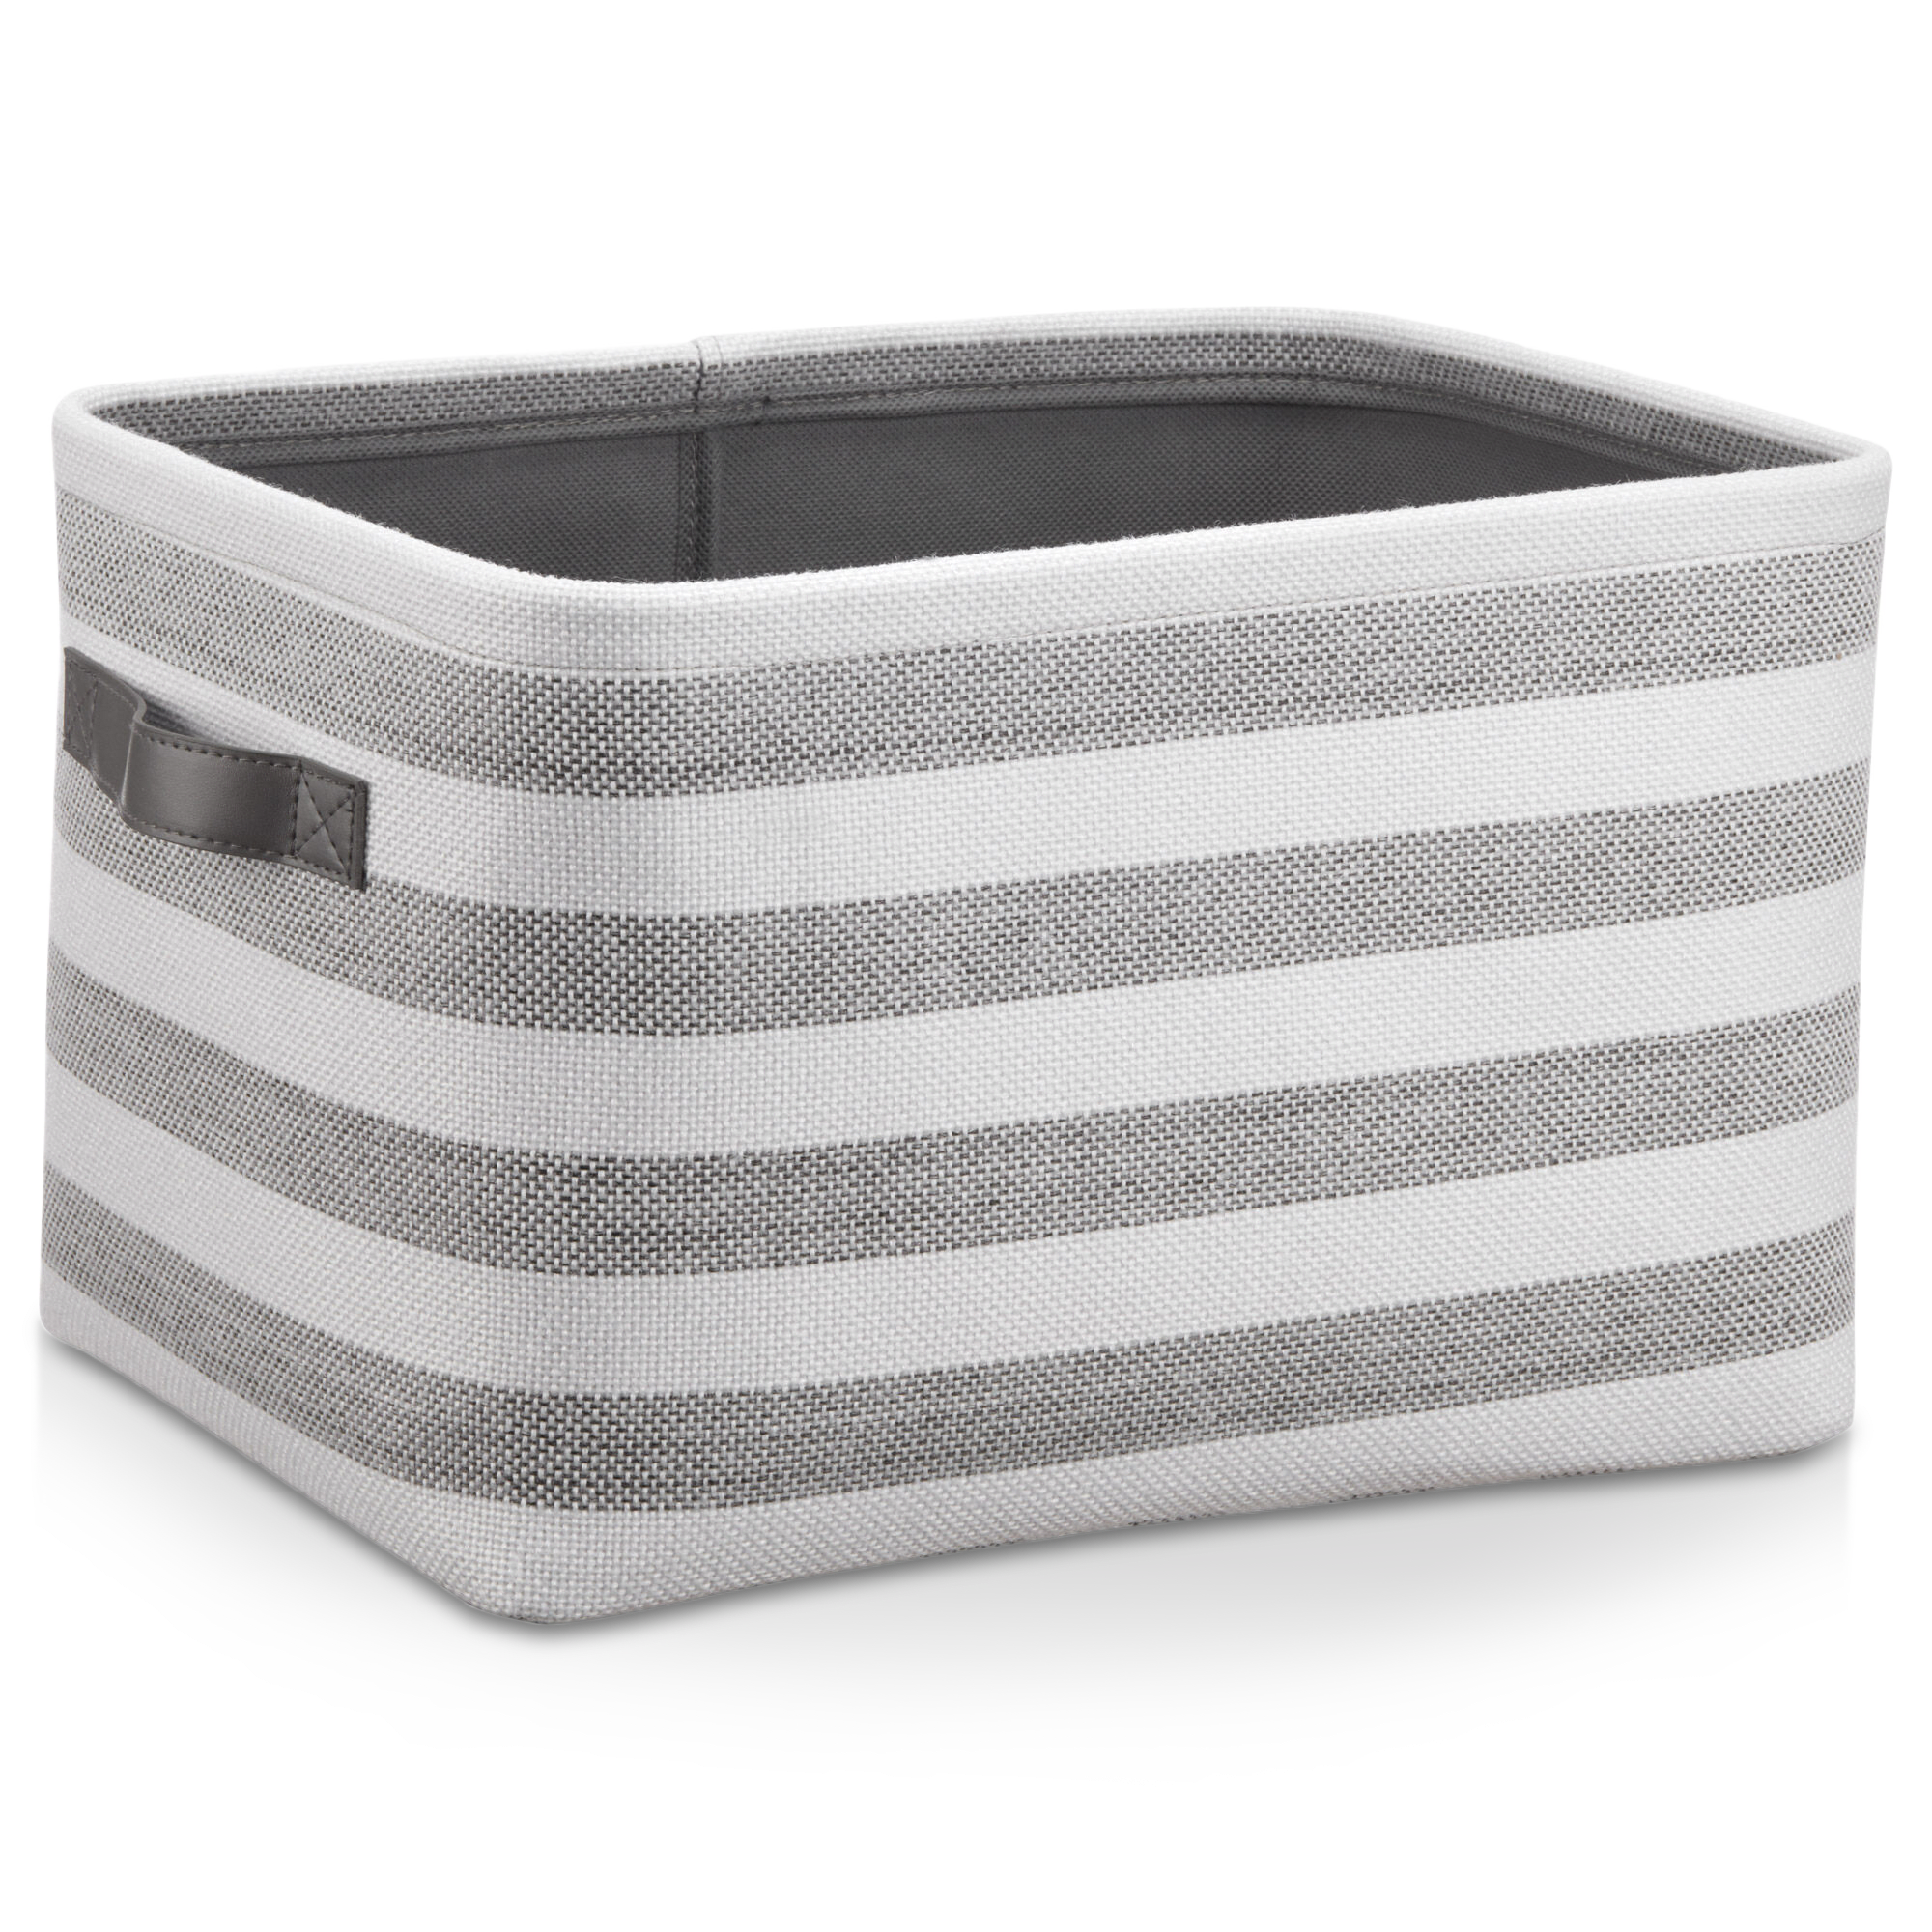 Striped Storage Basket With Handles